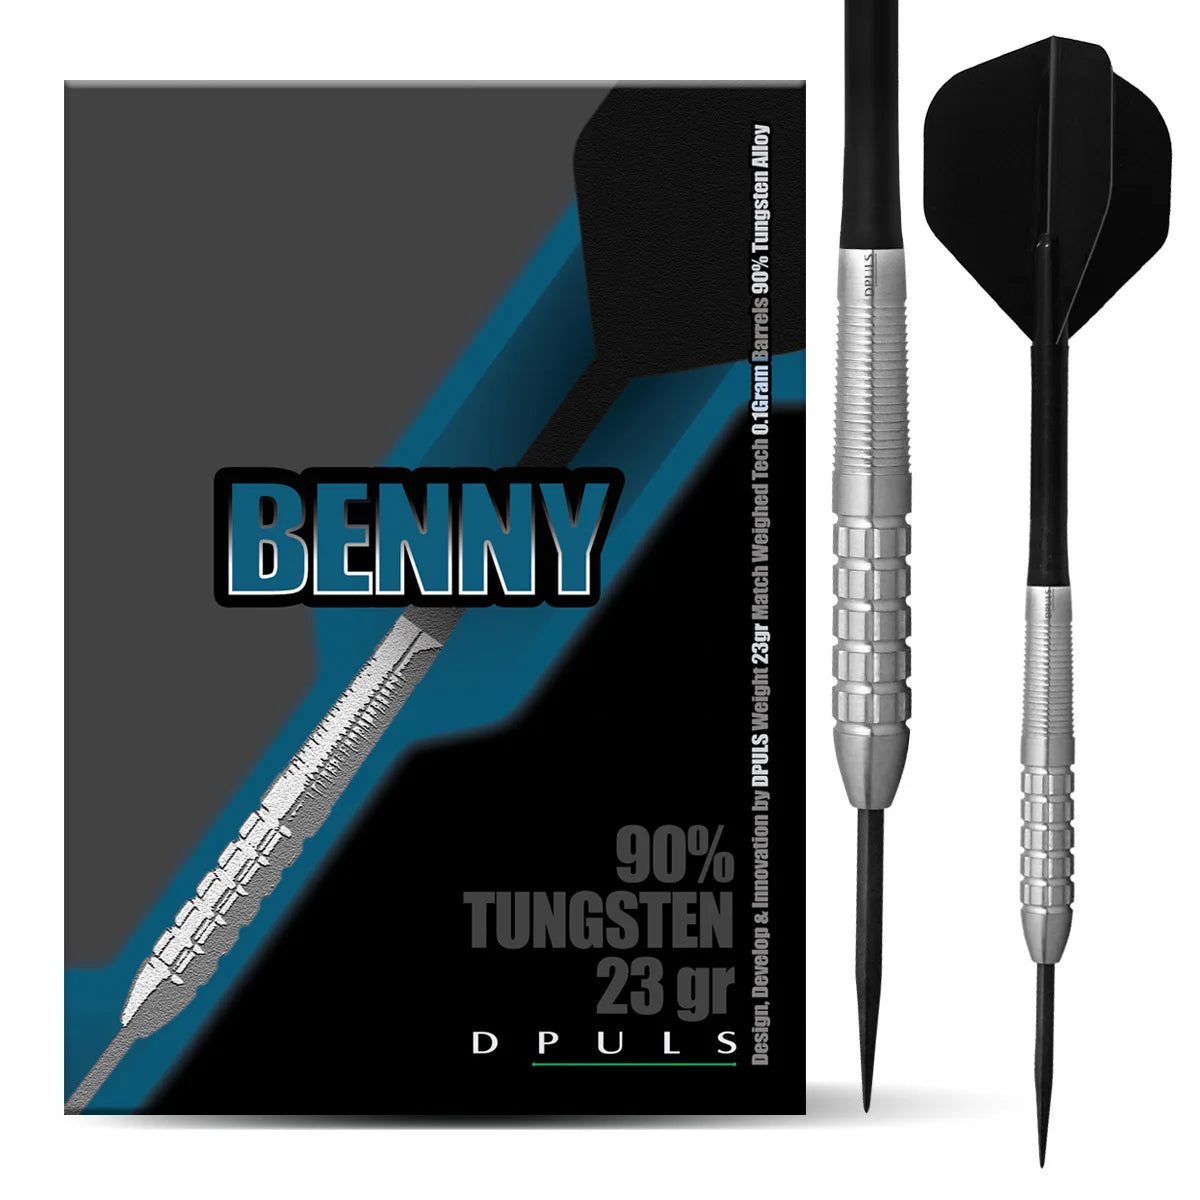 DPULS Benny Steel Darts 23g/90%